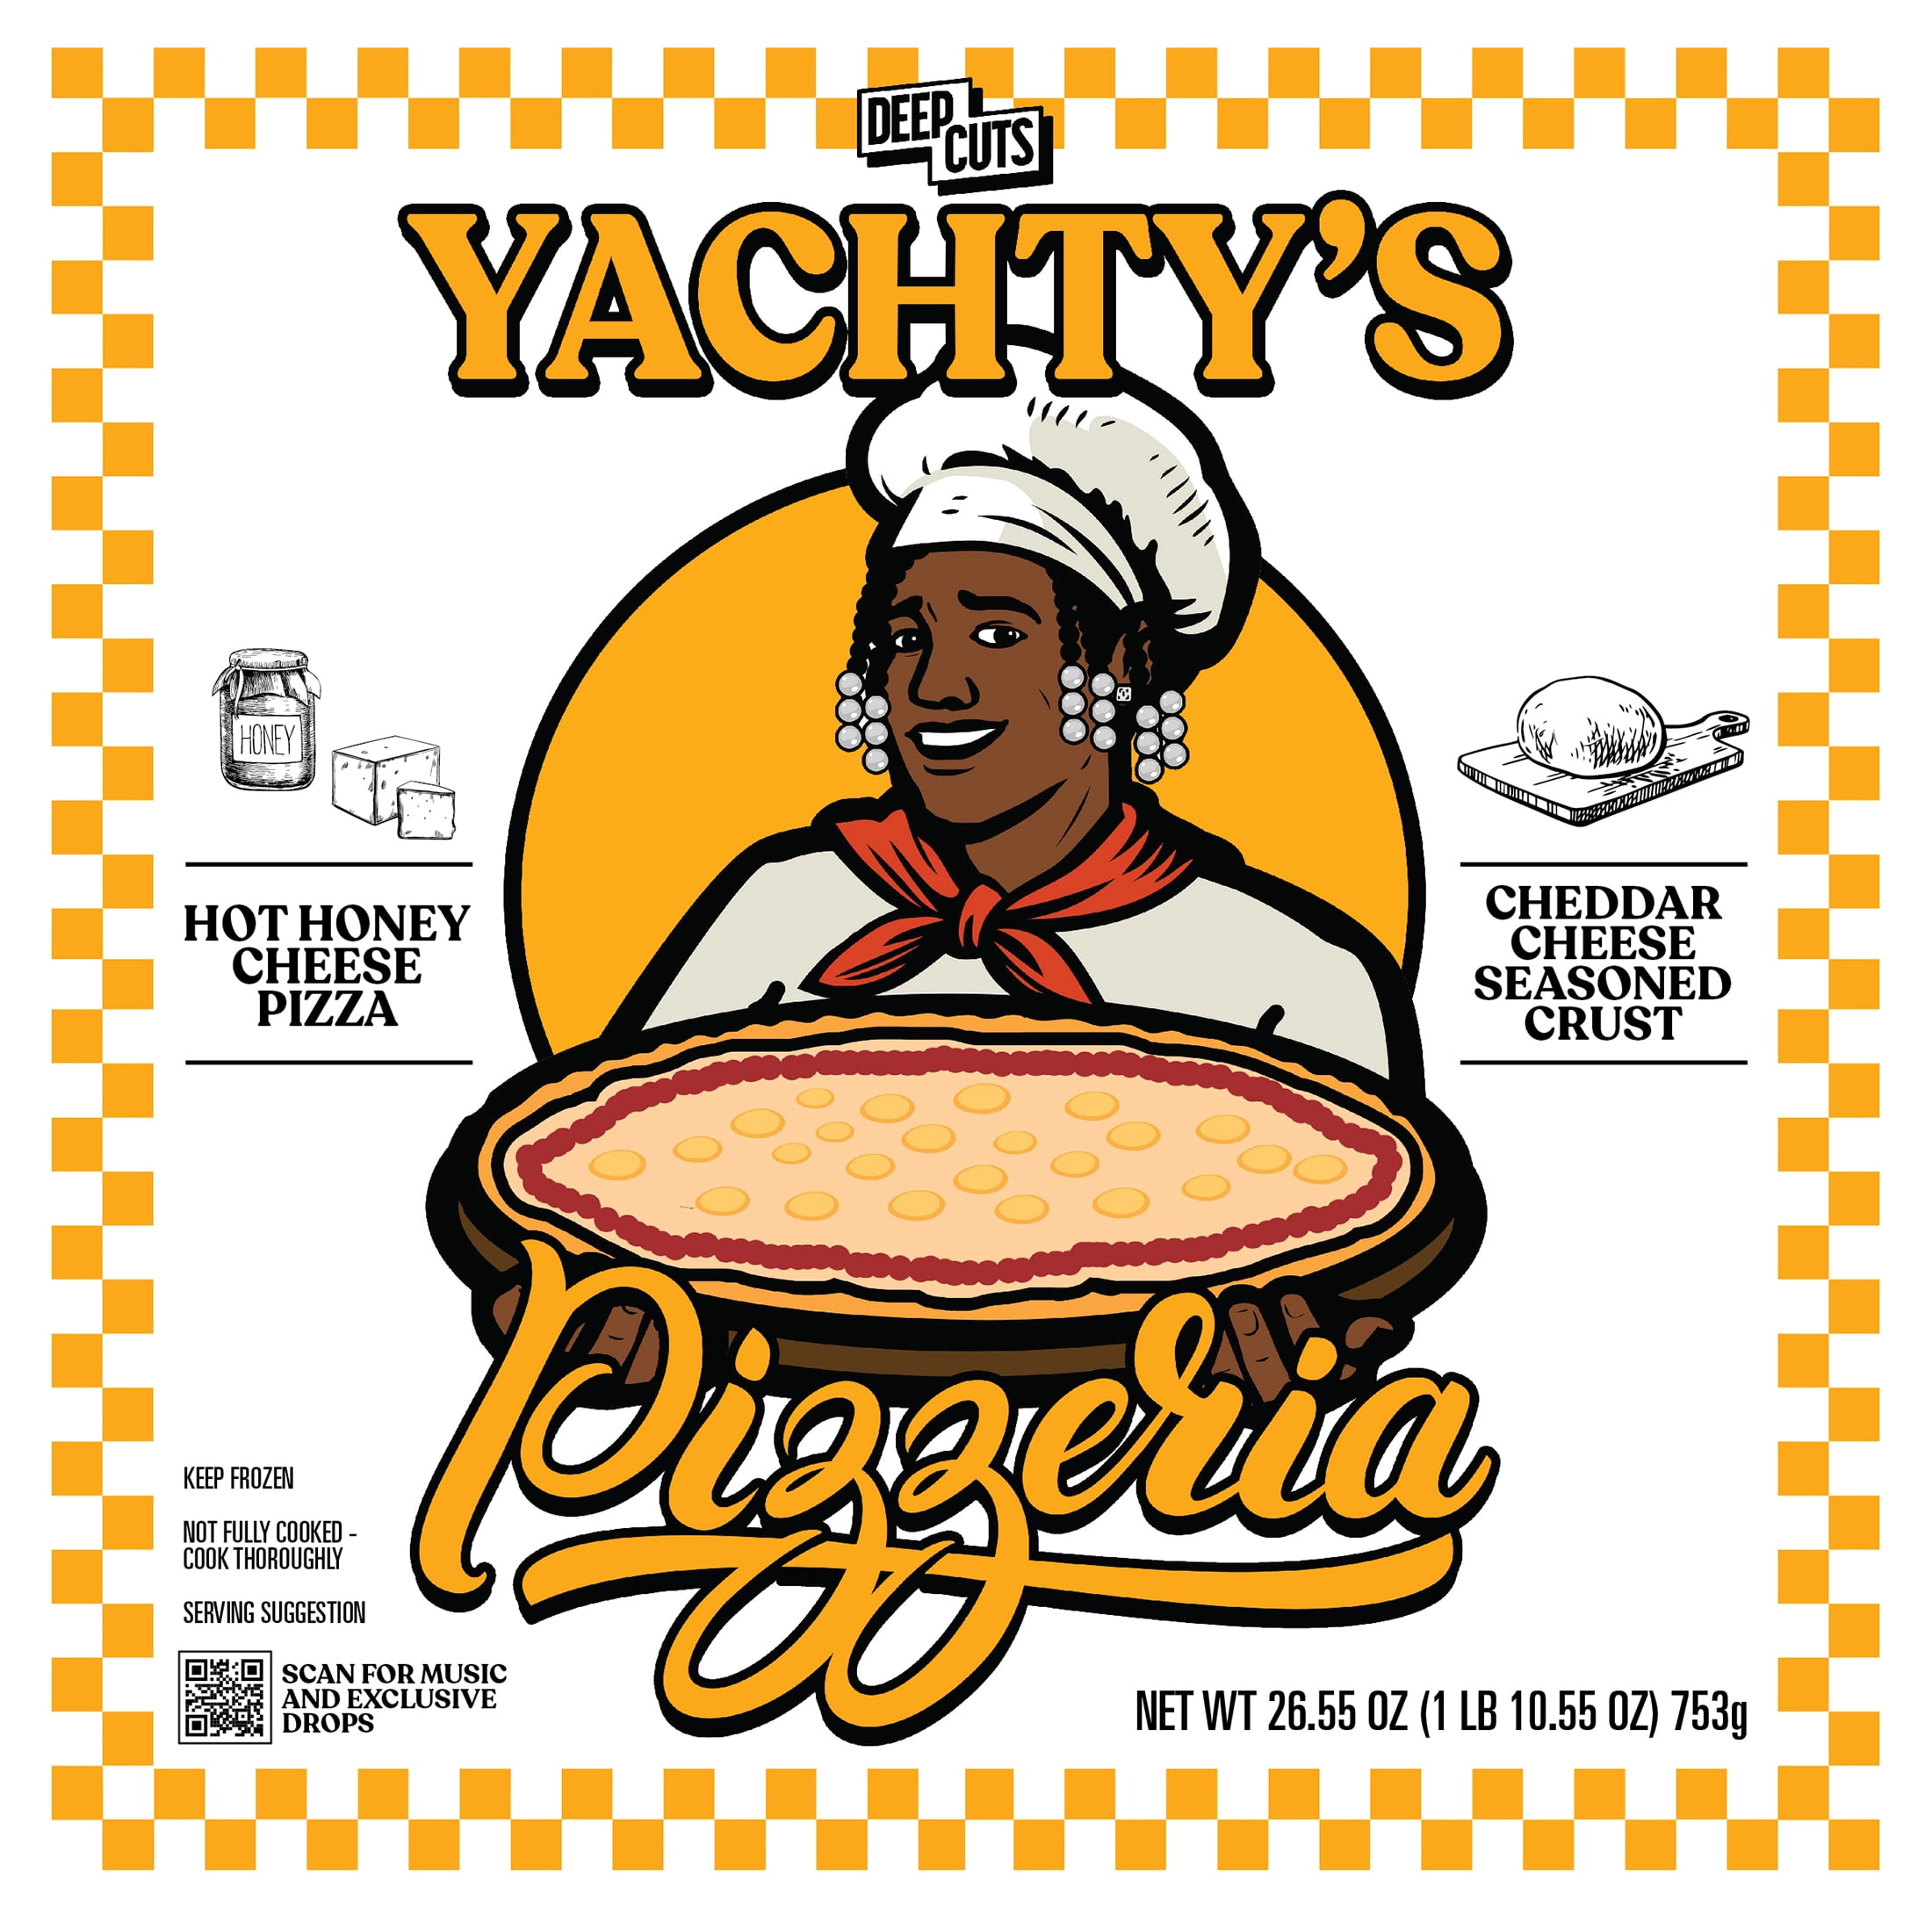 yachty's hot honey cheese pizza